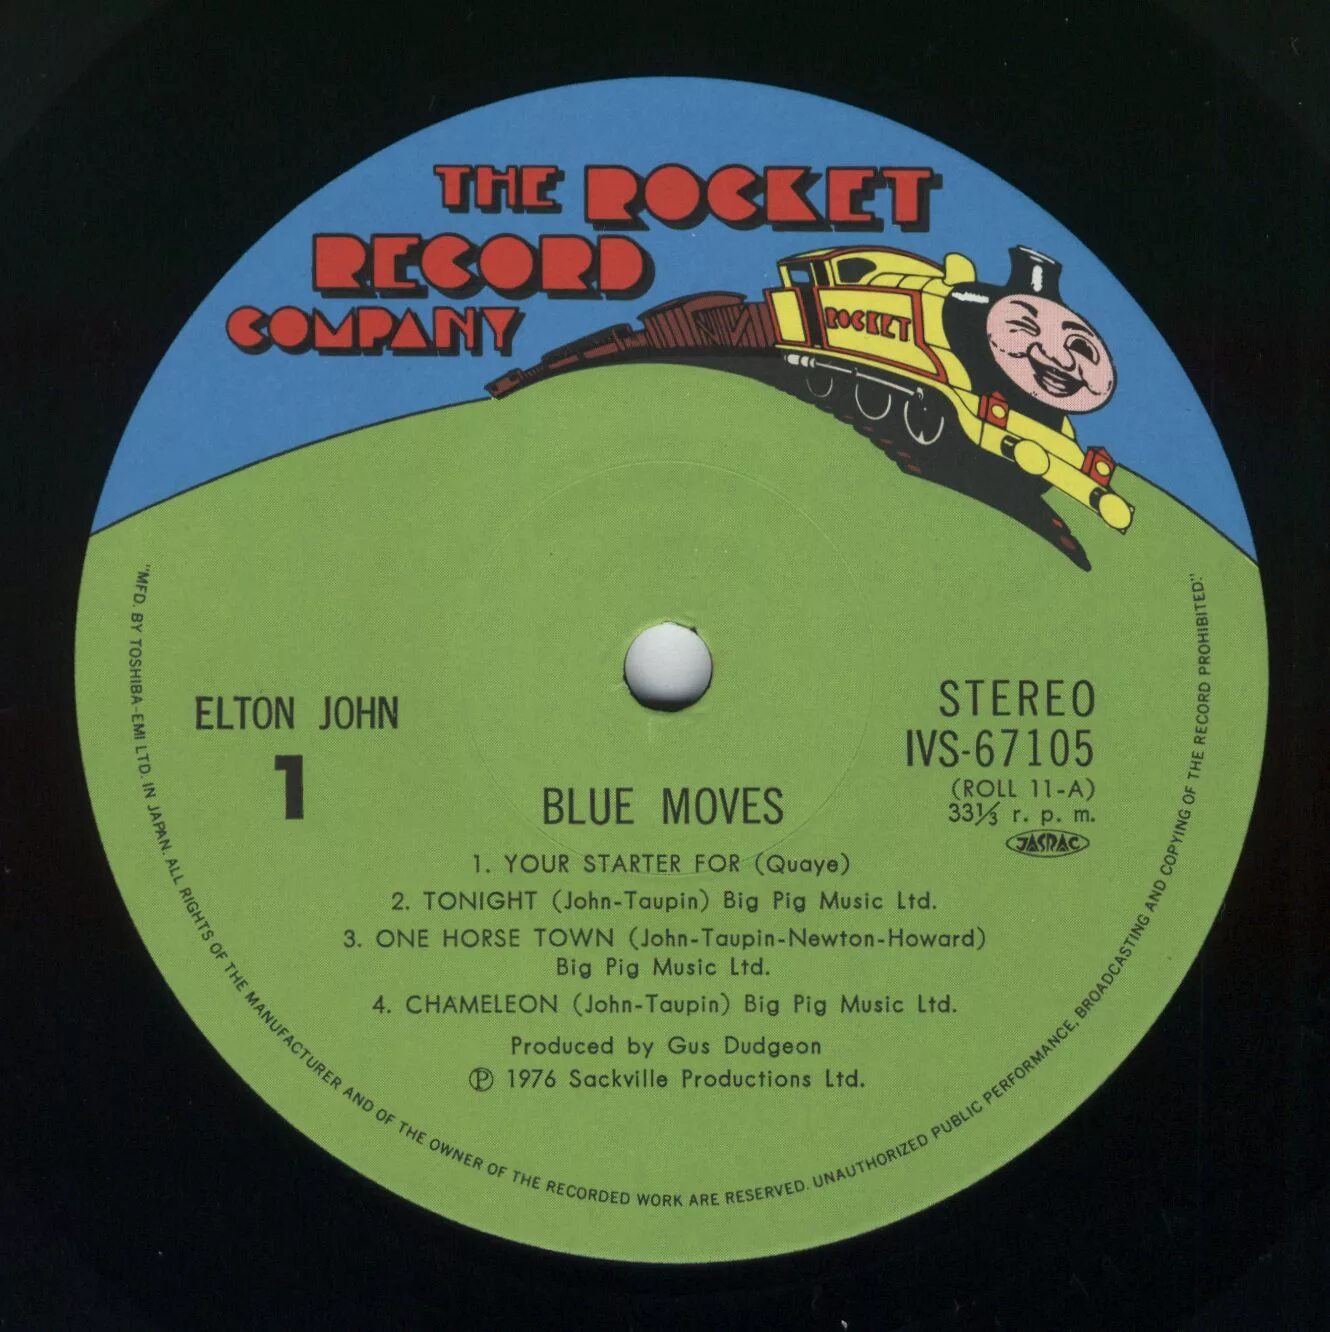 Blue moves Элтон Джон. Elton John 1976. Elton John album Blue moves. Элтон Джон 1976. Elton john текст